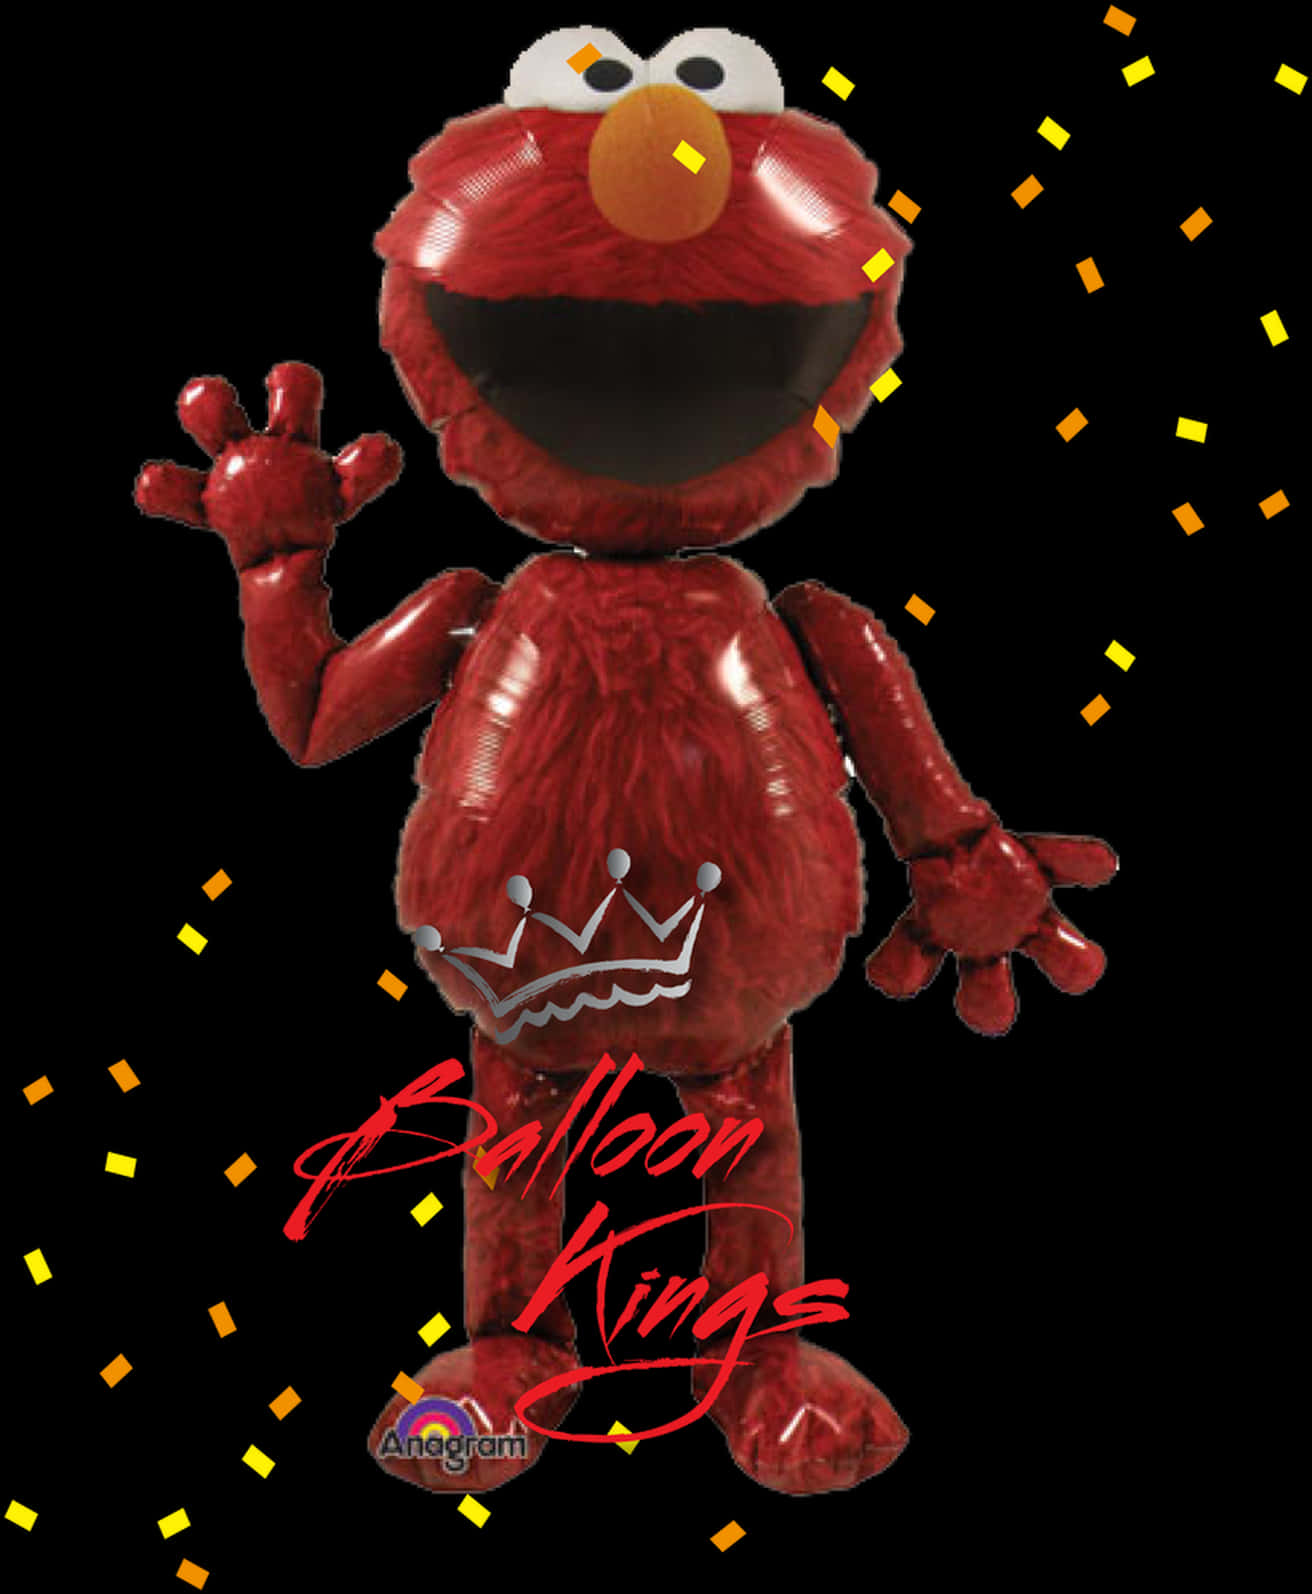 Elmo Balloon King Promotional Image PNG